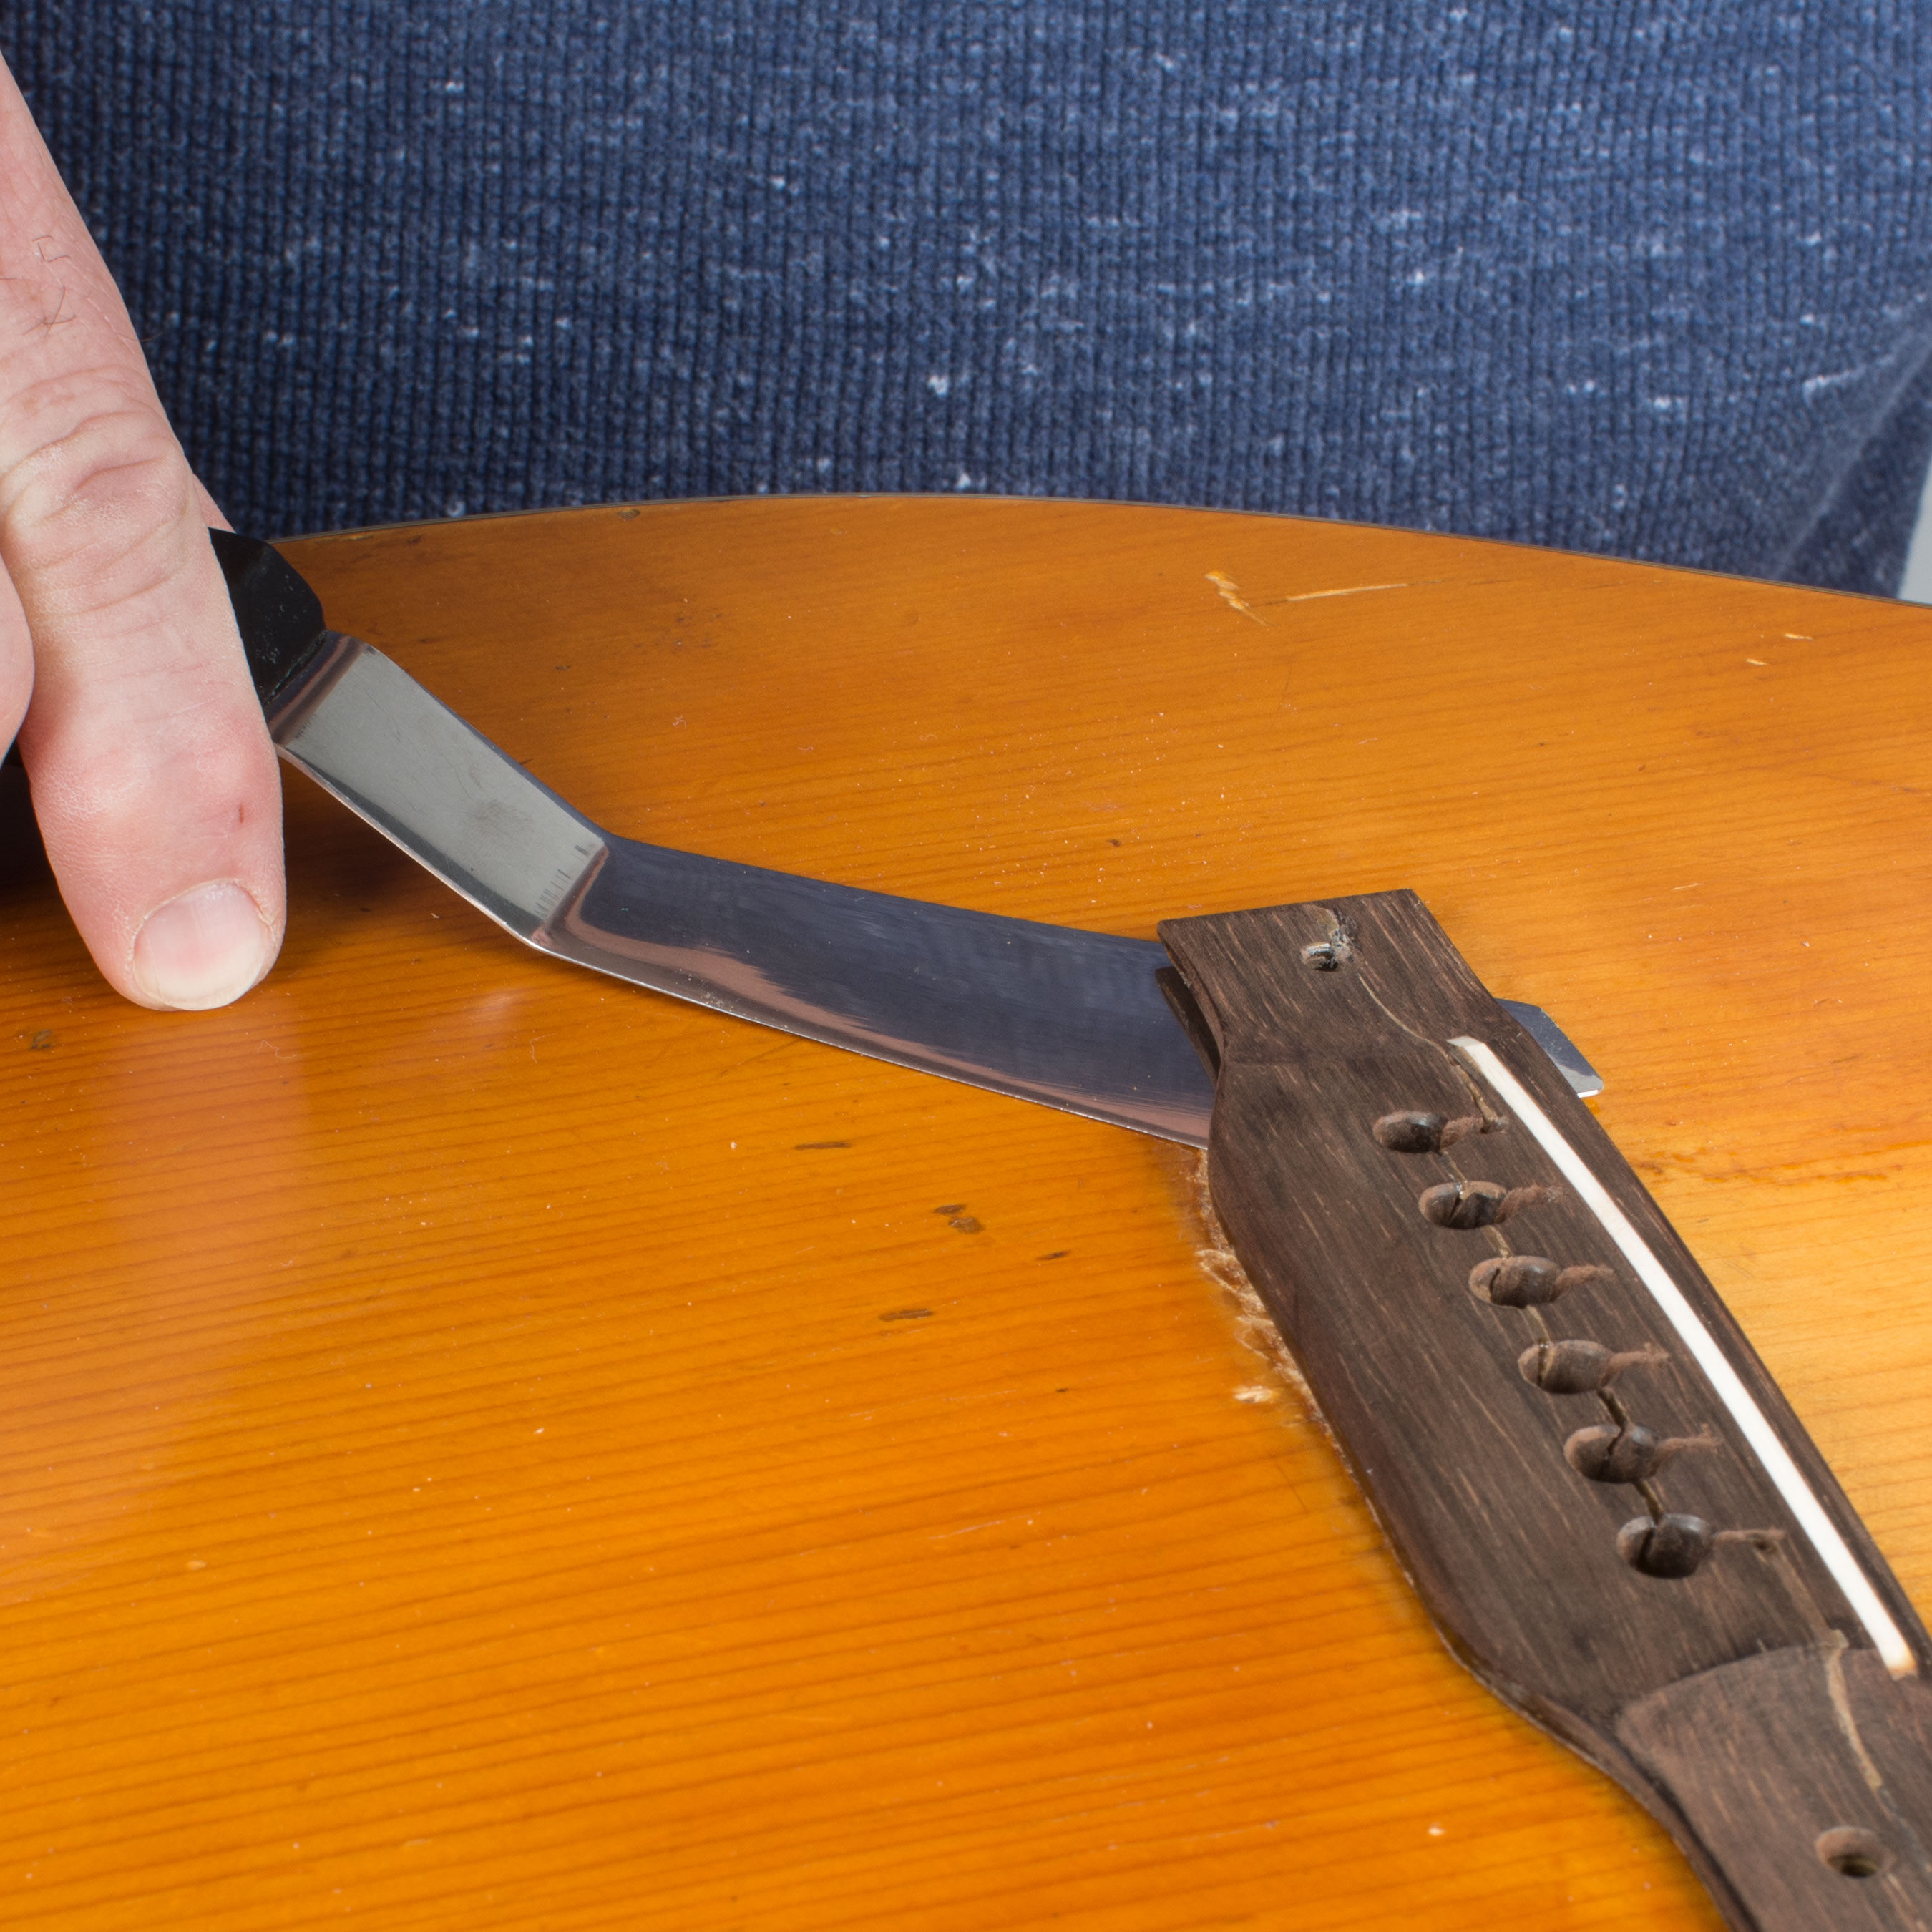 Narrow Small, Guitar Repair Palette Knife from StewMac. StewMac